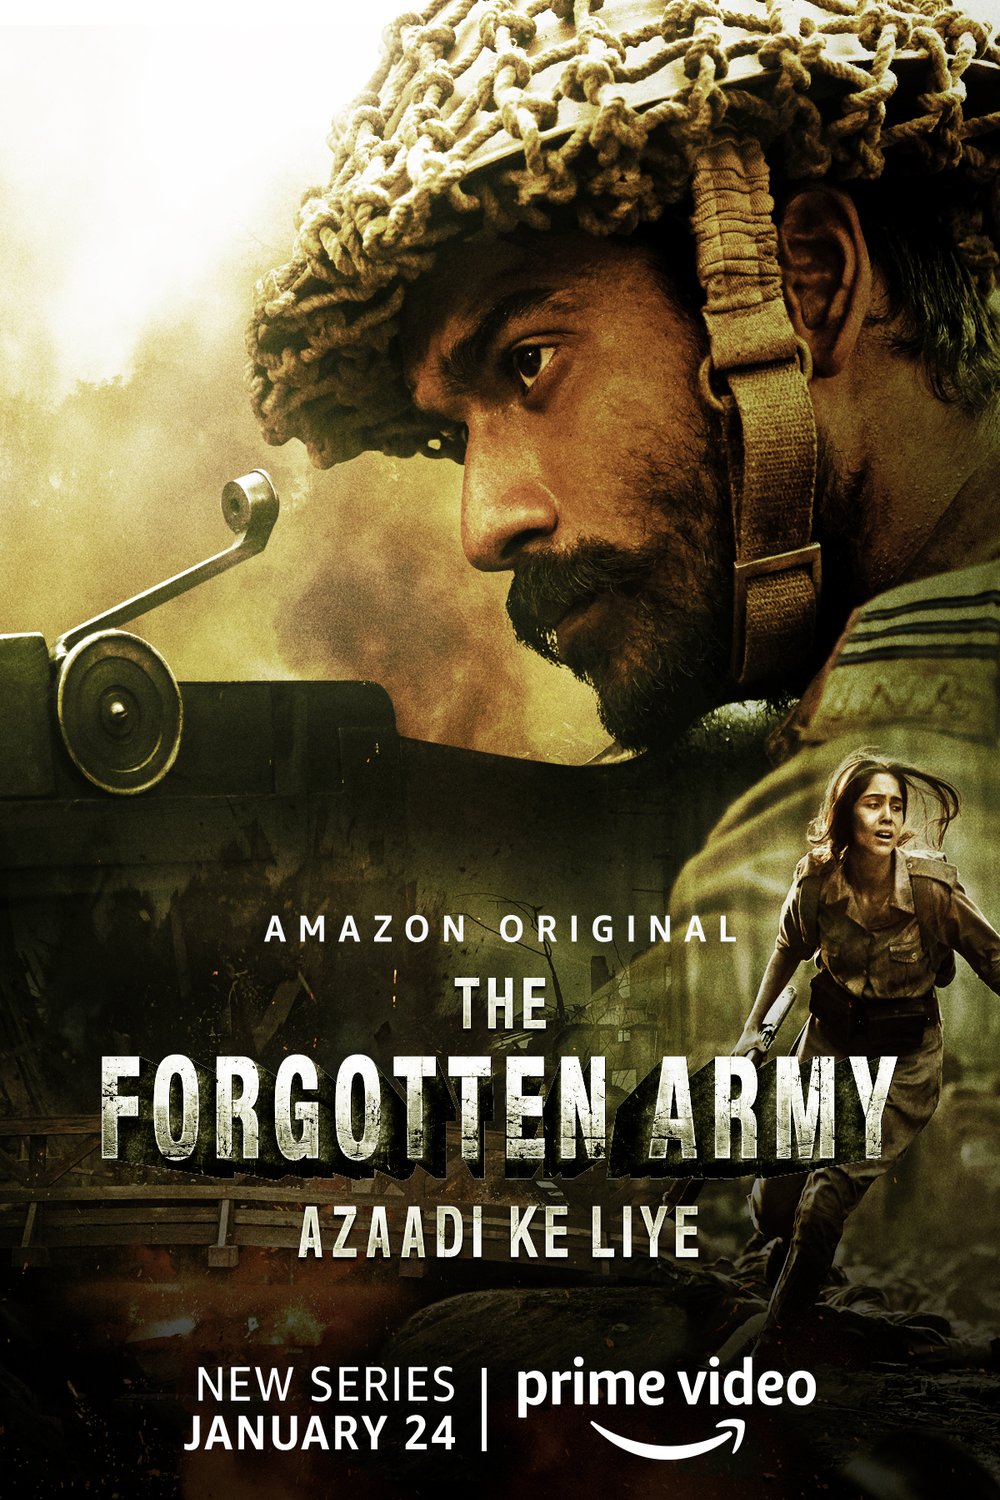 L'affiche originale du film The Forgotten Army - Azaadi ke liye en Hindi